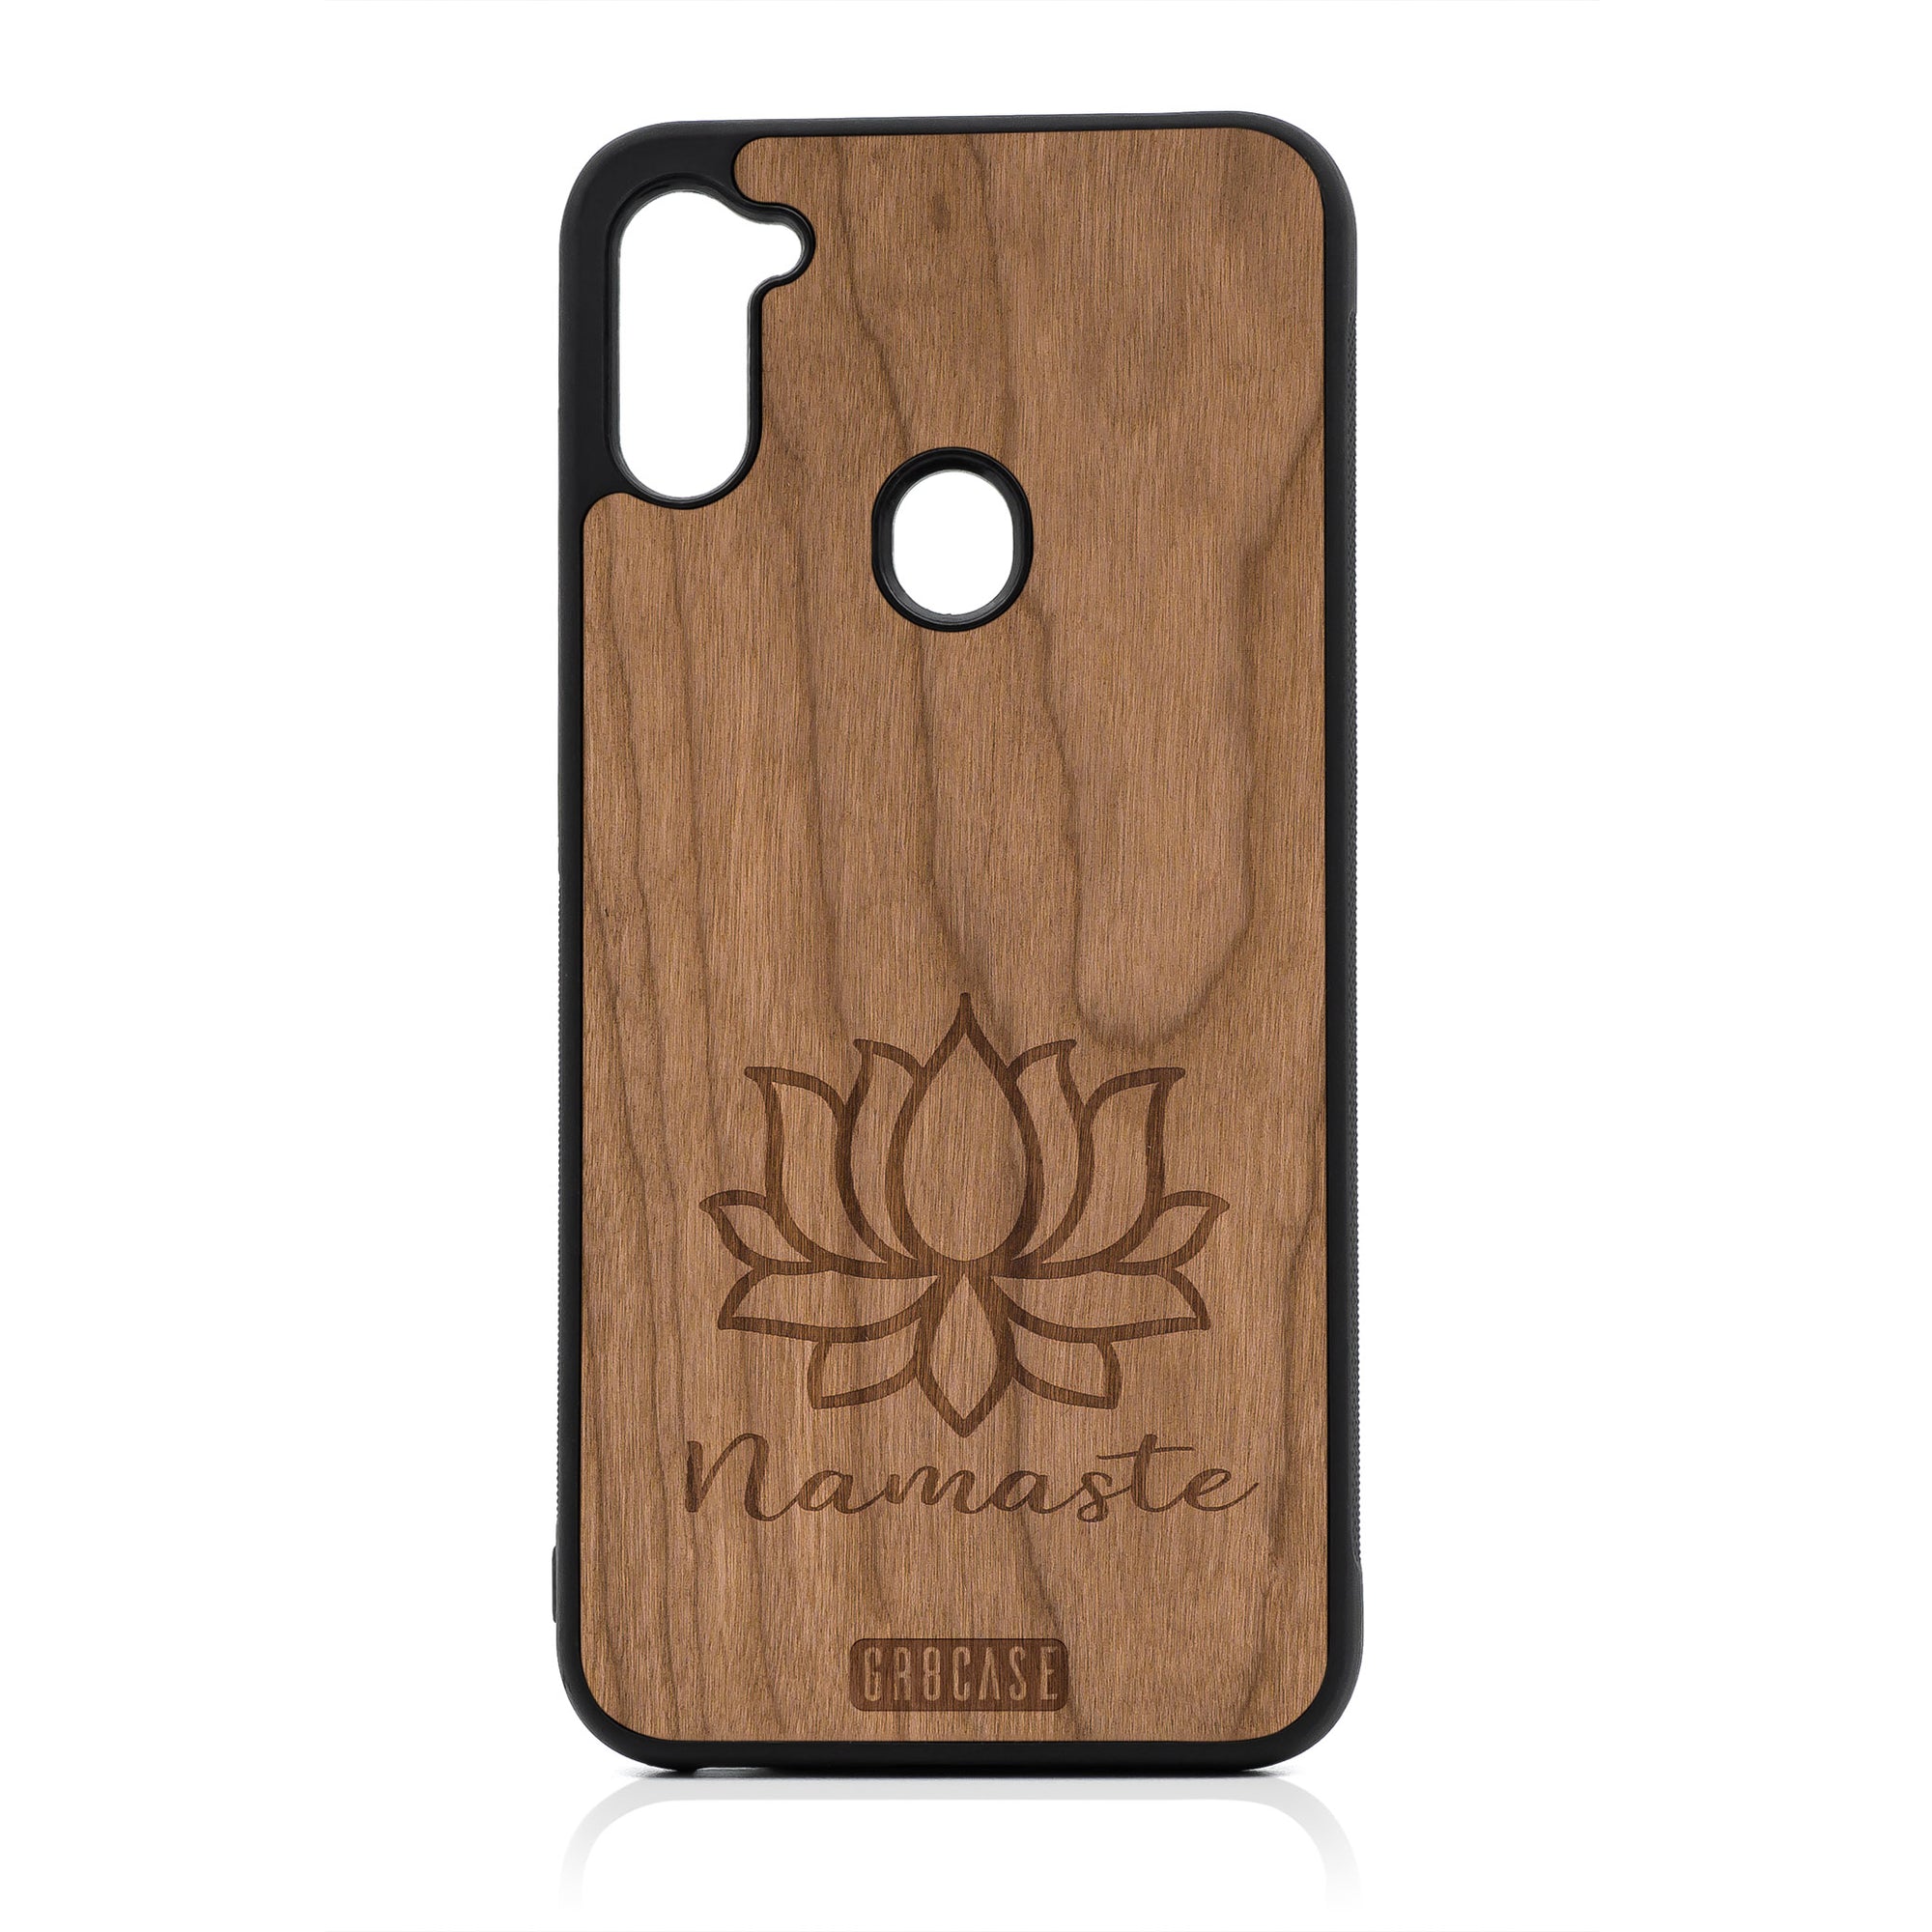 Namaste (Lotus Flower) Design Wood Case For Samsung Galaxy A11